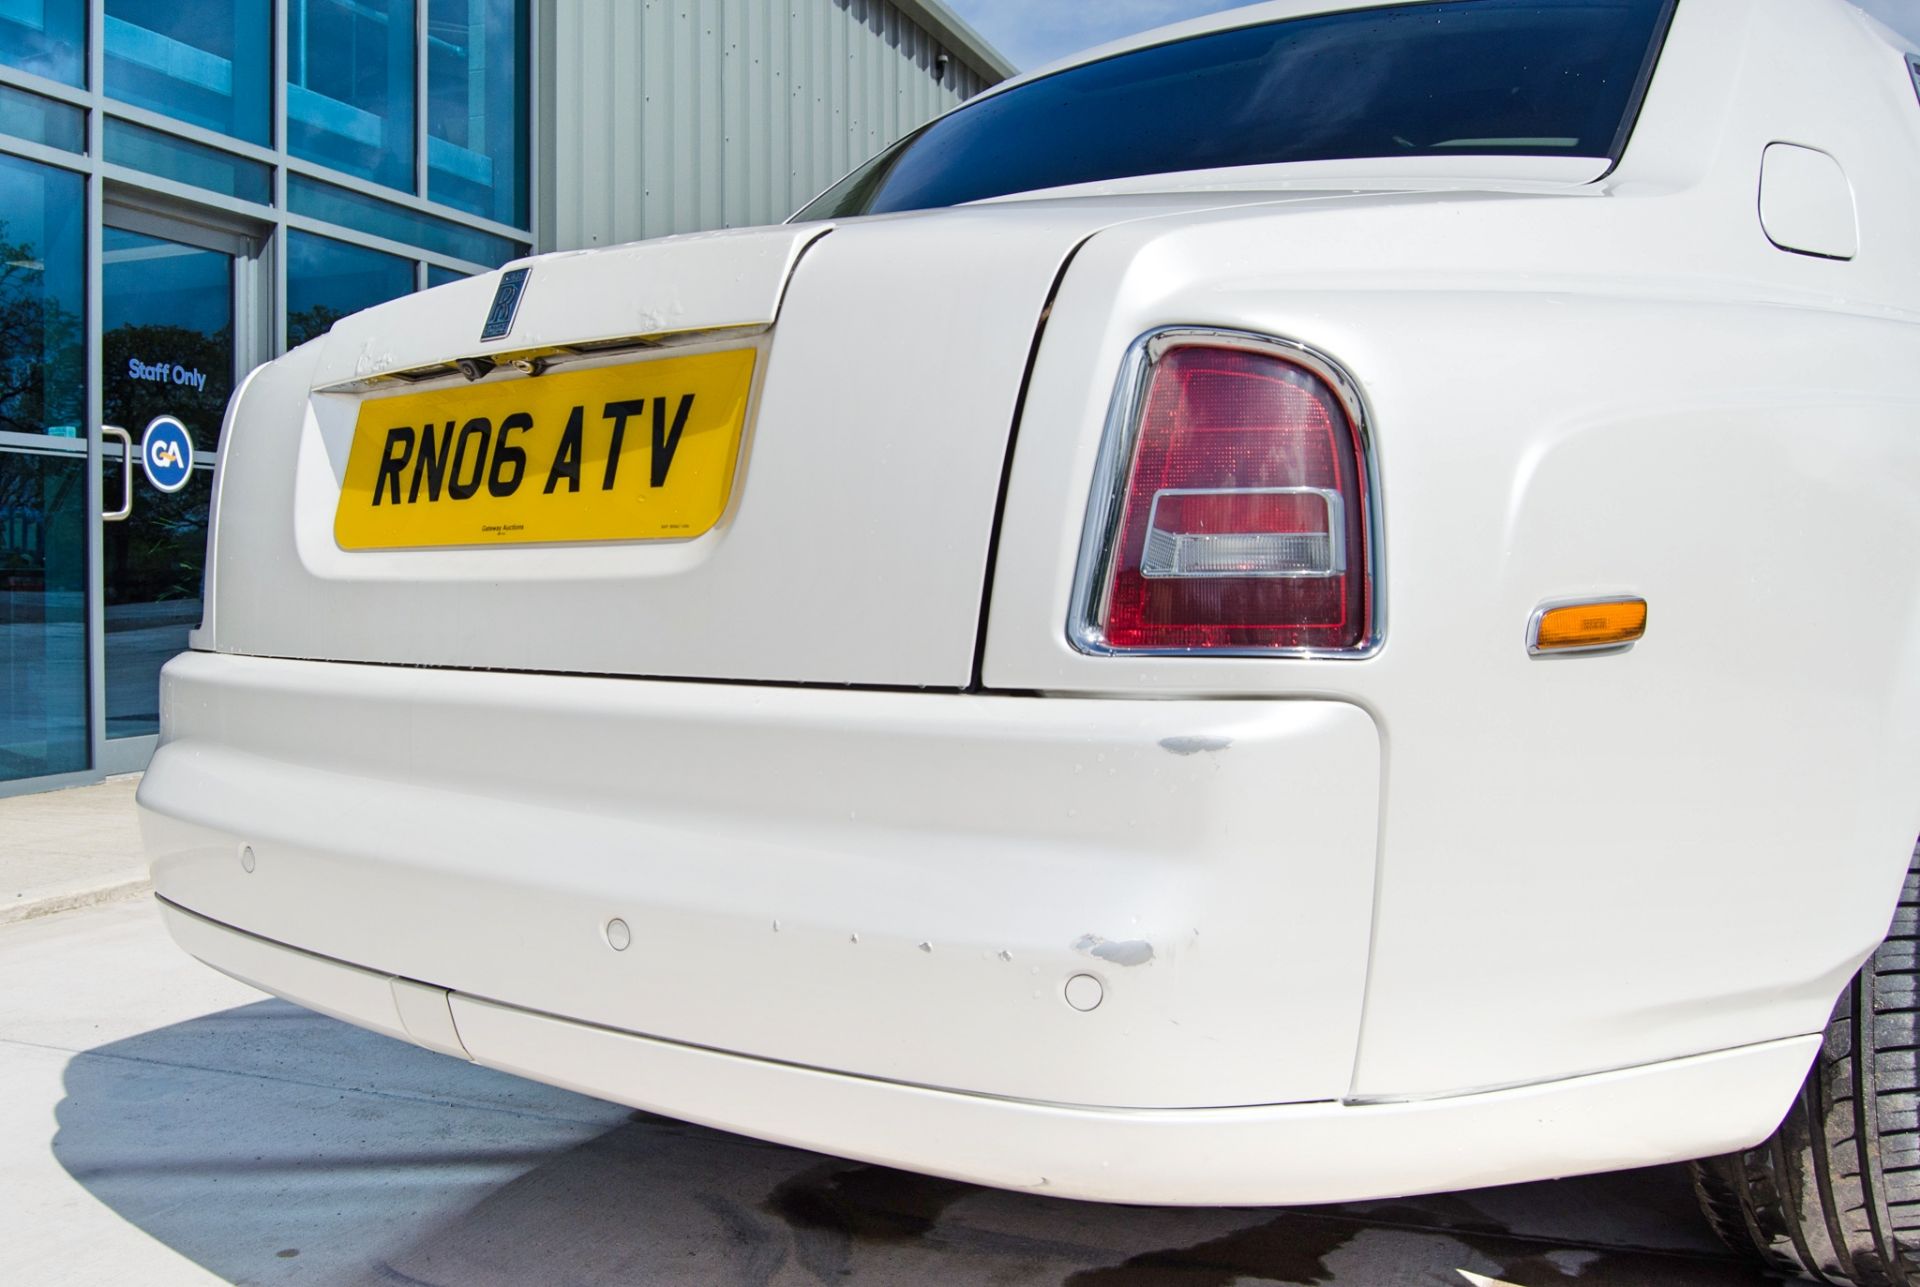 Rolls Royce Phantom 6749cc V12 Auto 4 door saloon car Registration Number: RN06 ATV Date of - Image 20 of 52